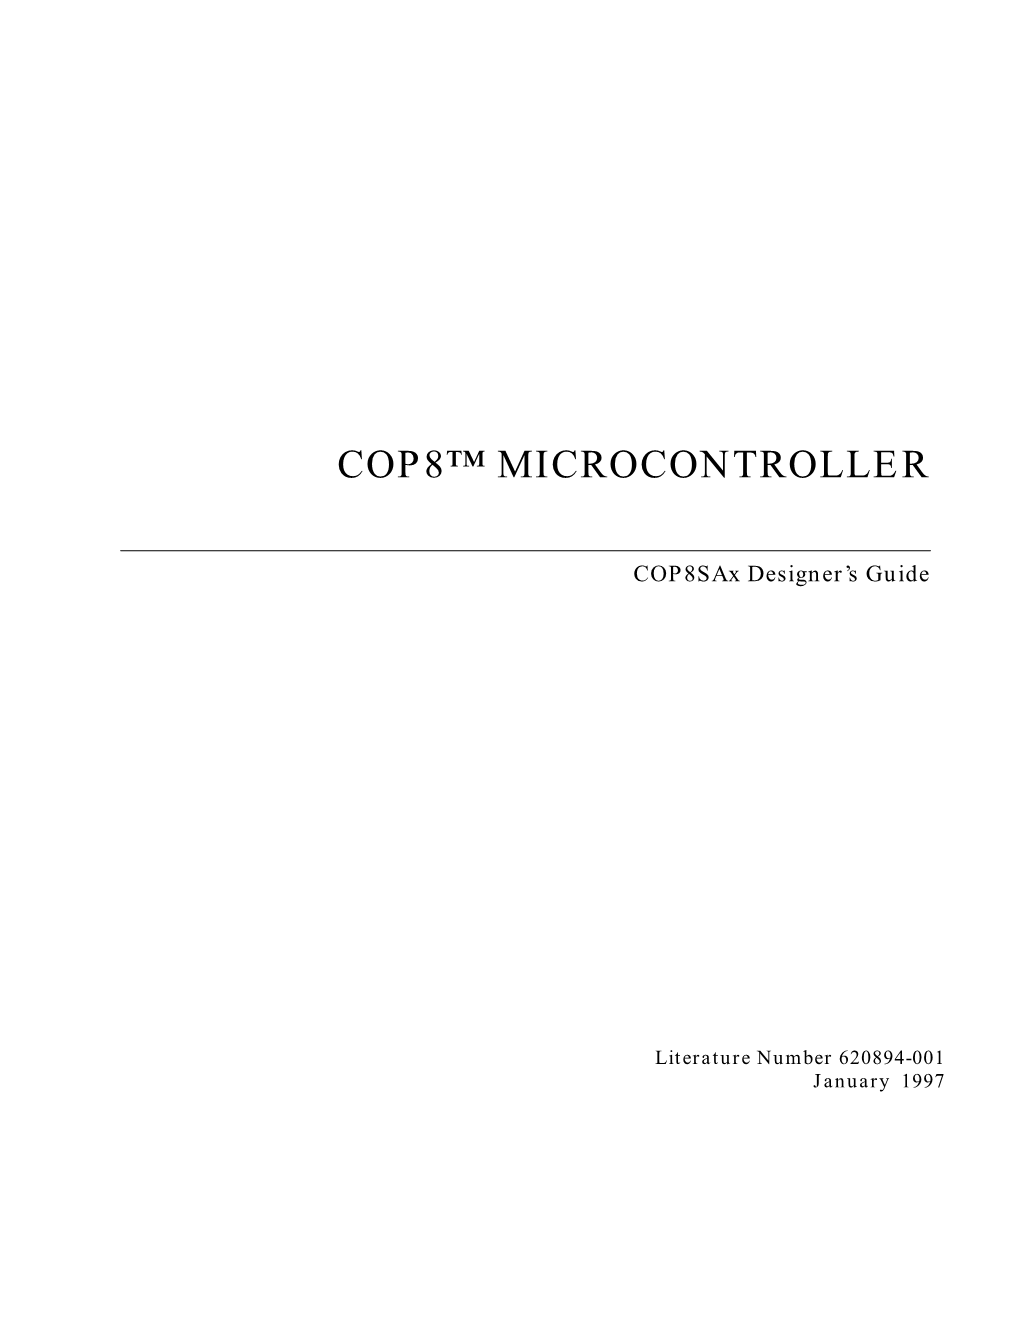 COP8 Microcontroller Cop8sax Designer's Guide